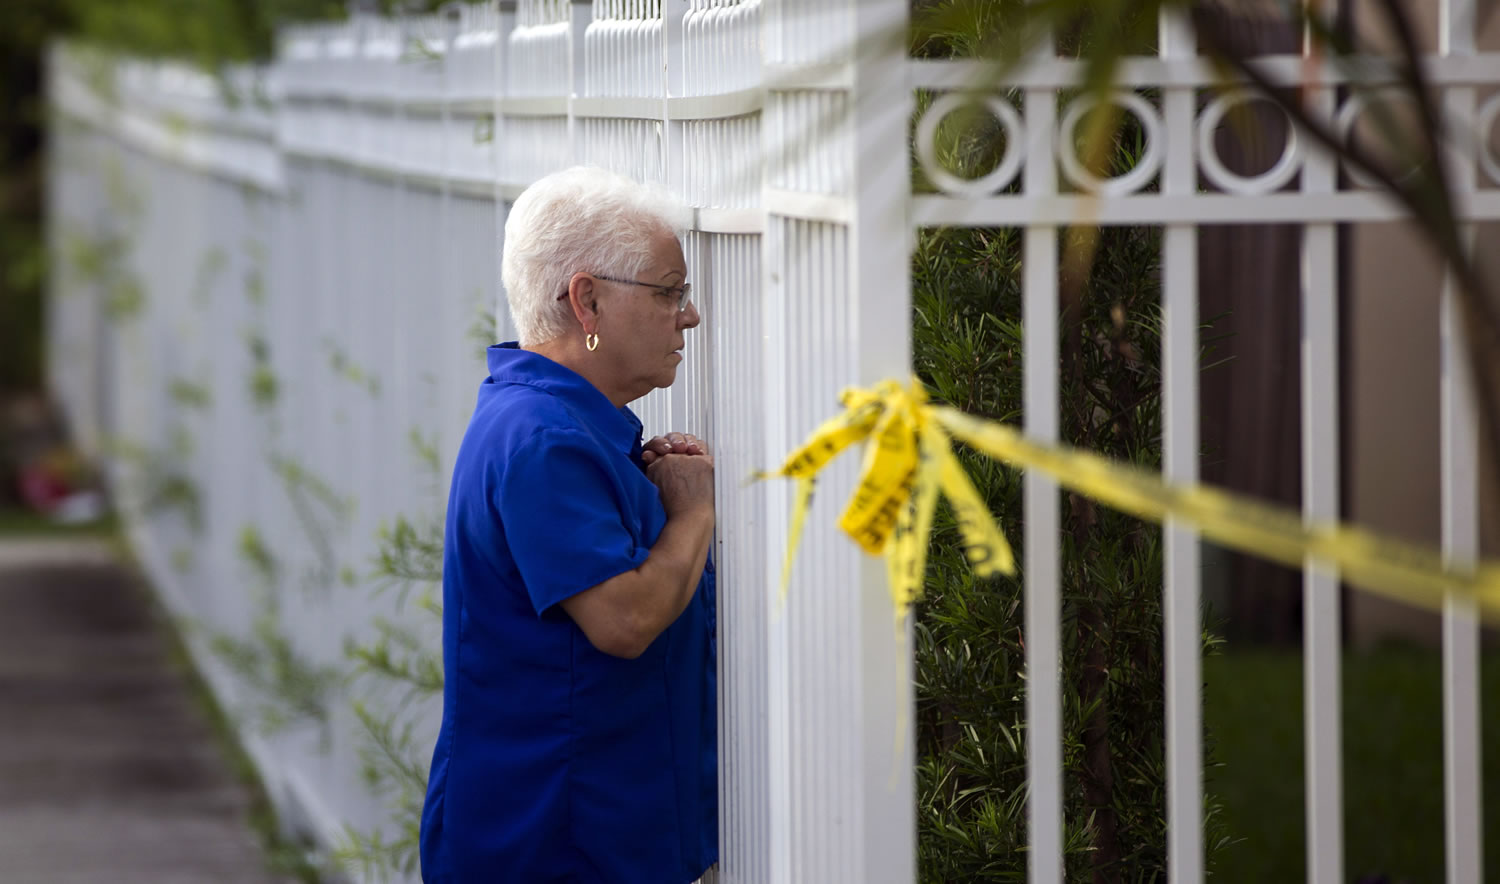 An unidentified woman looks through a fence near a murder scene Thursday in Miami.